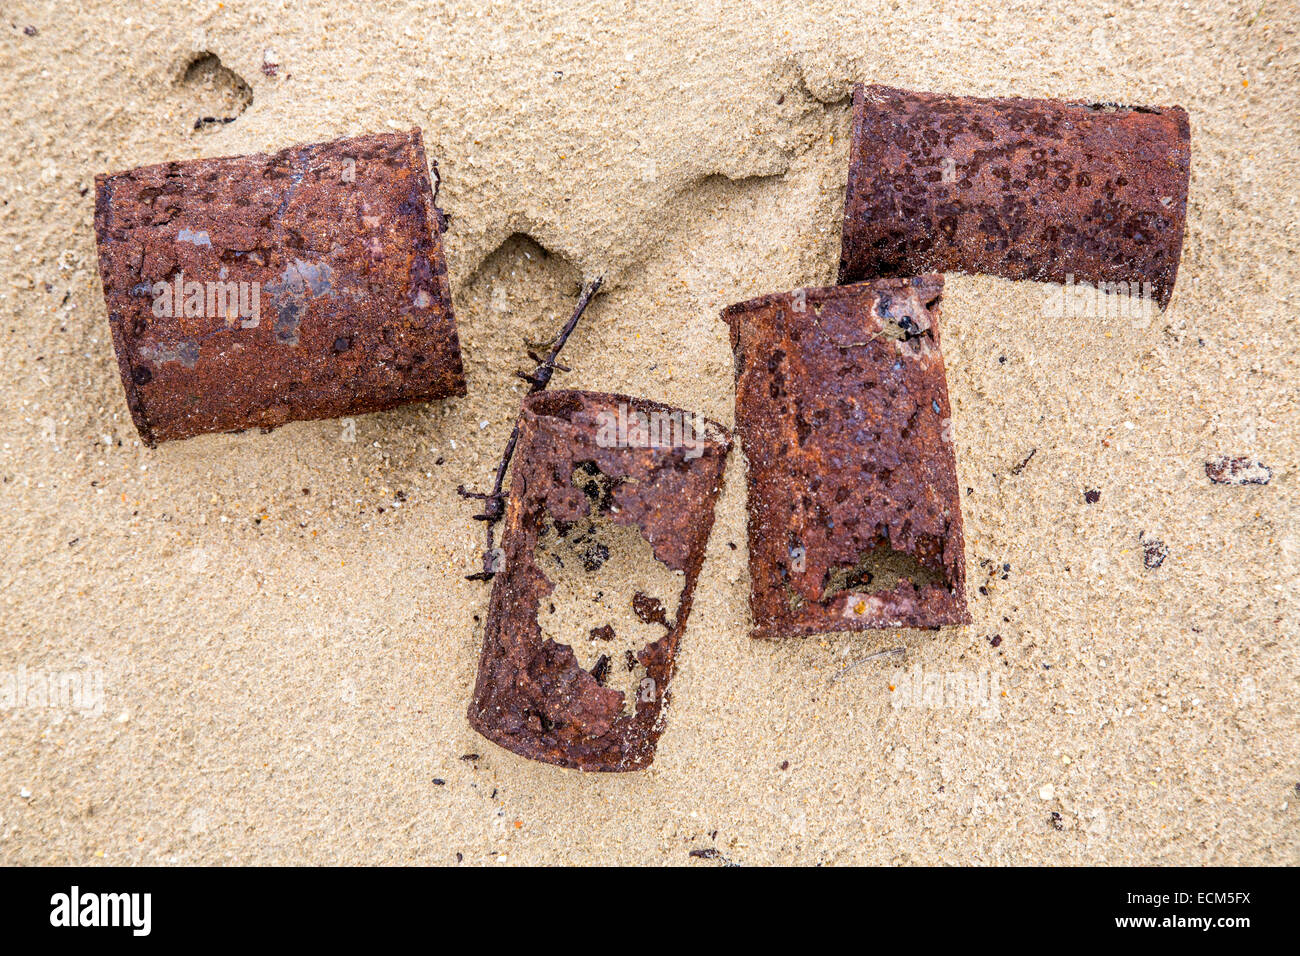 Rusty, old tin cans on a sandy beach, Stock Photo